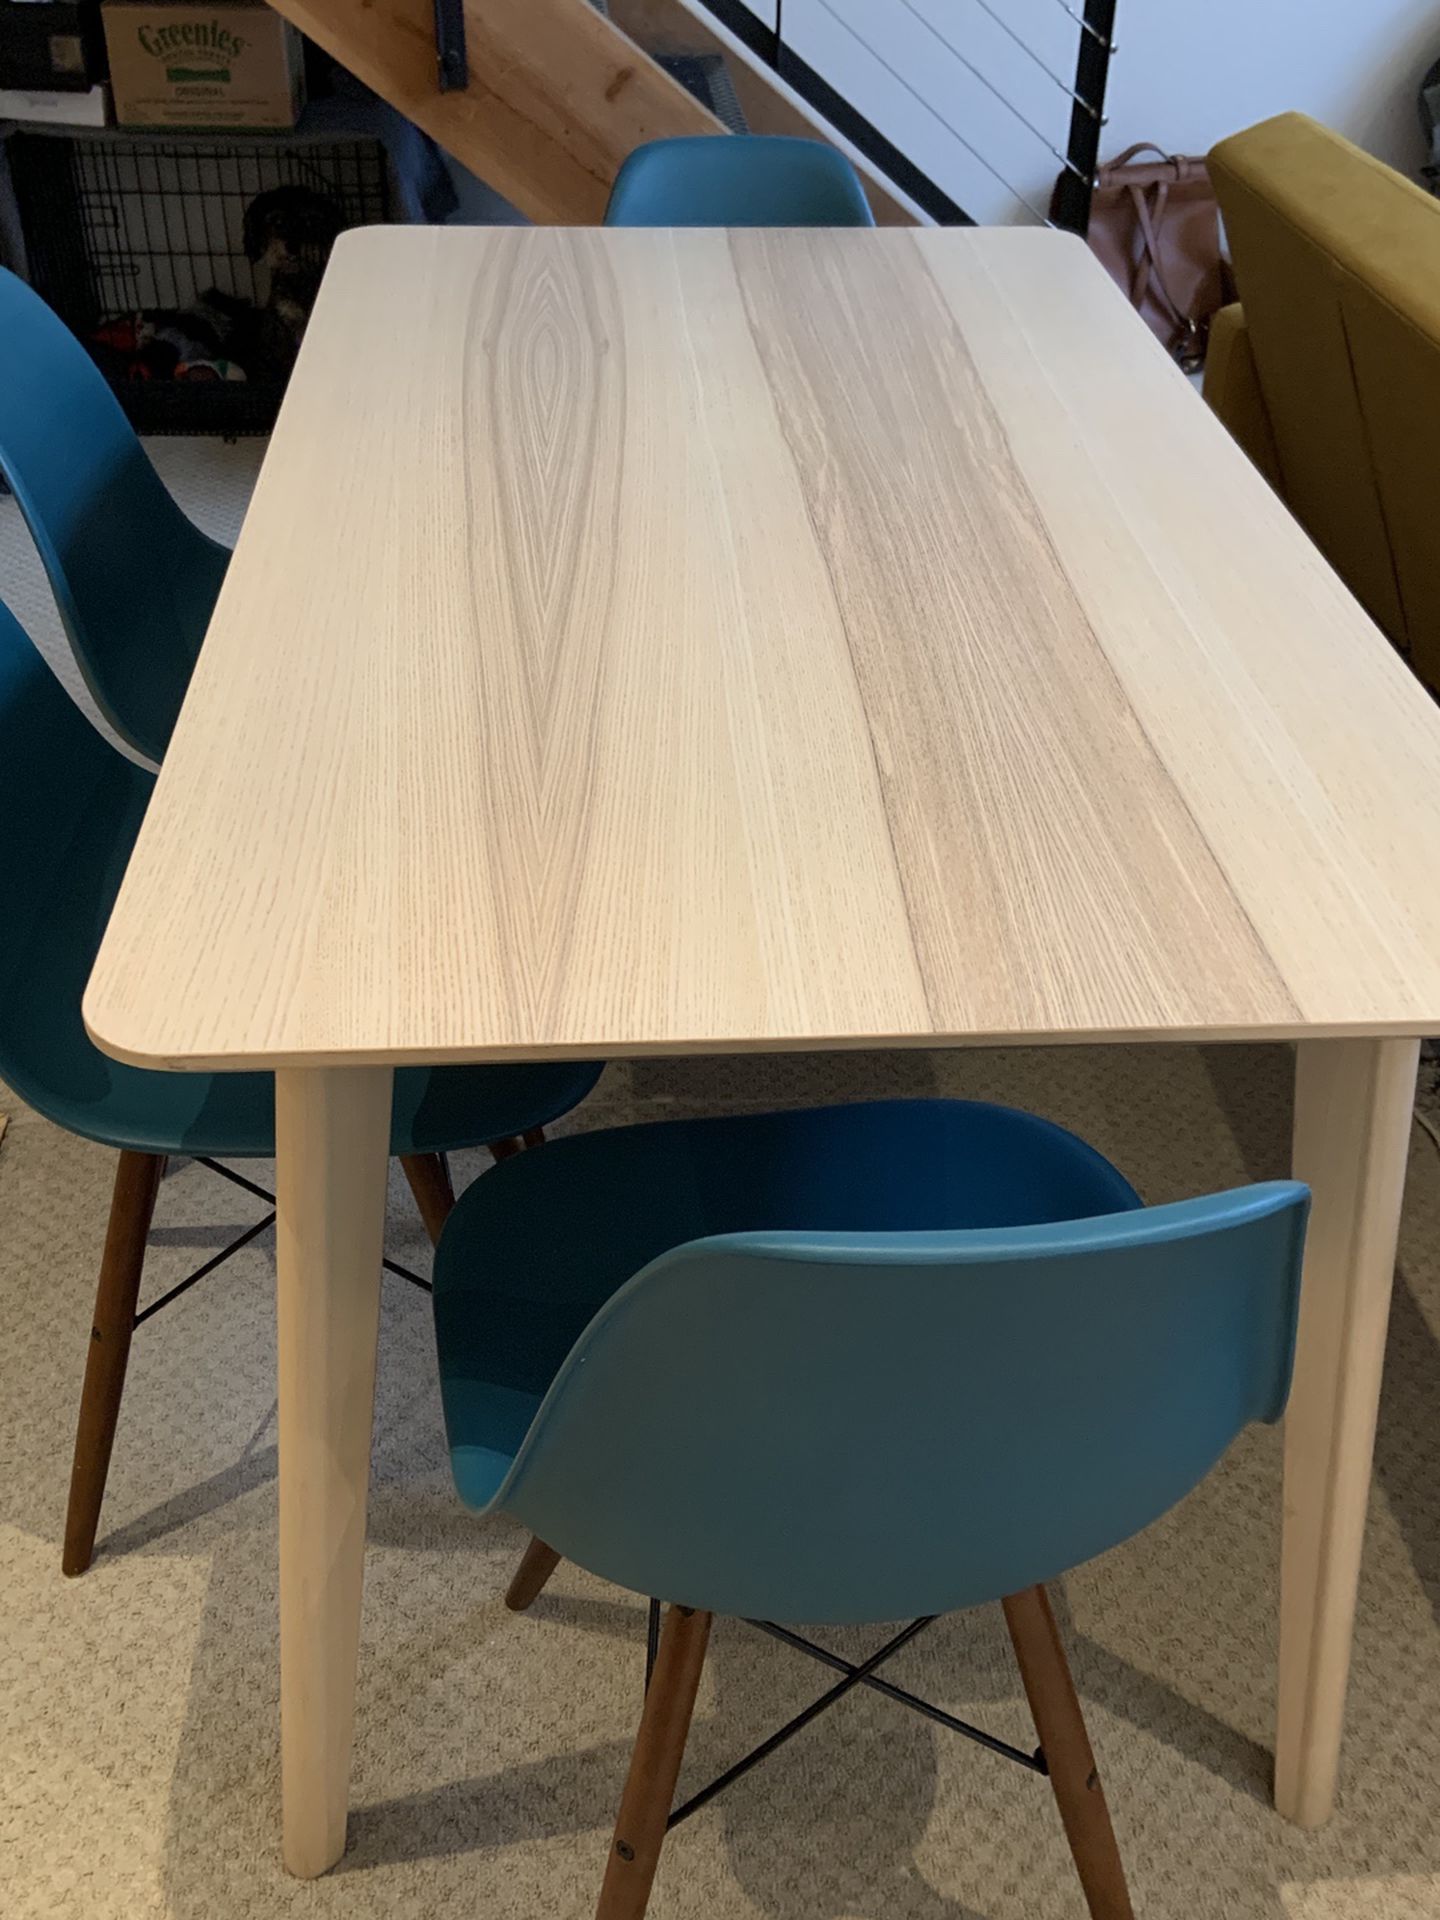 IKEA Modern Mid-Century Dining Table Chair Furniture Set